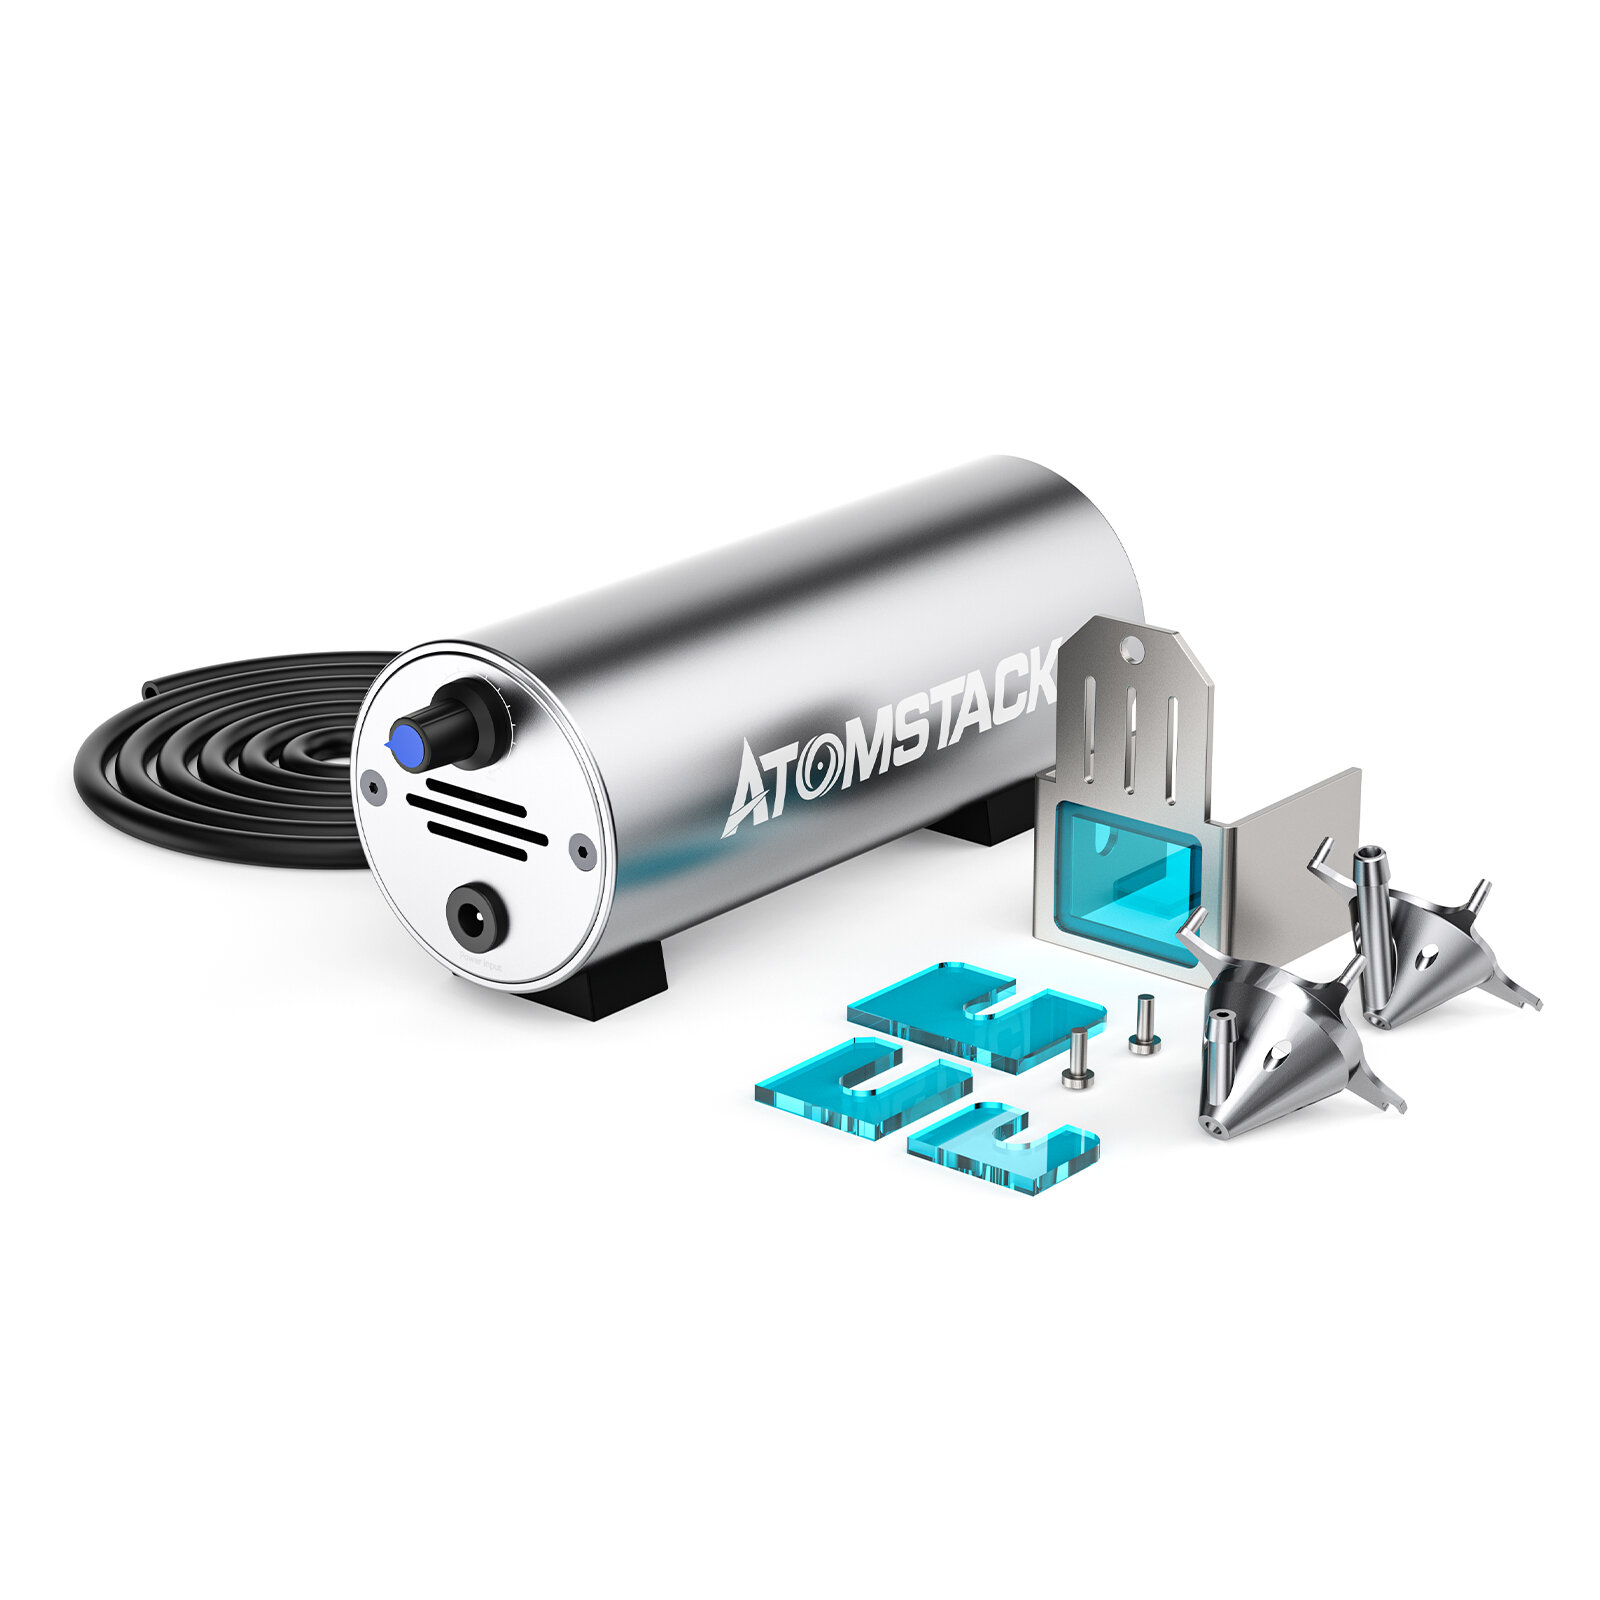 Atomstack Air Assist System for Laser Engraving Machine Laser Cutting Engraving Air-assisted Accesso